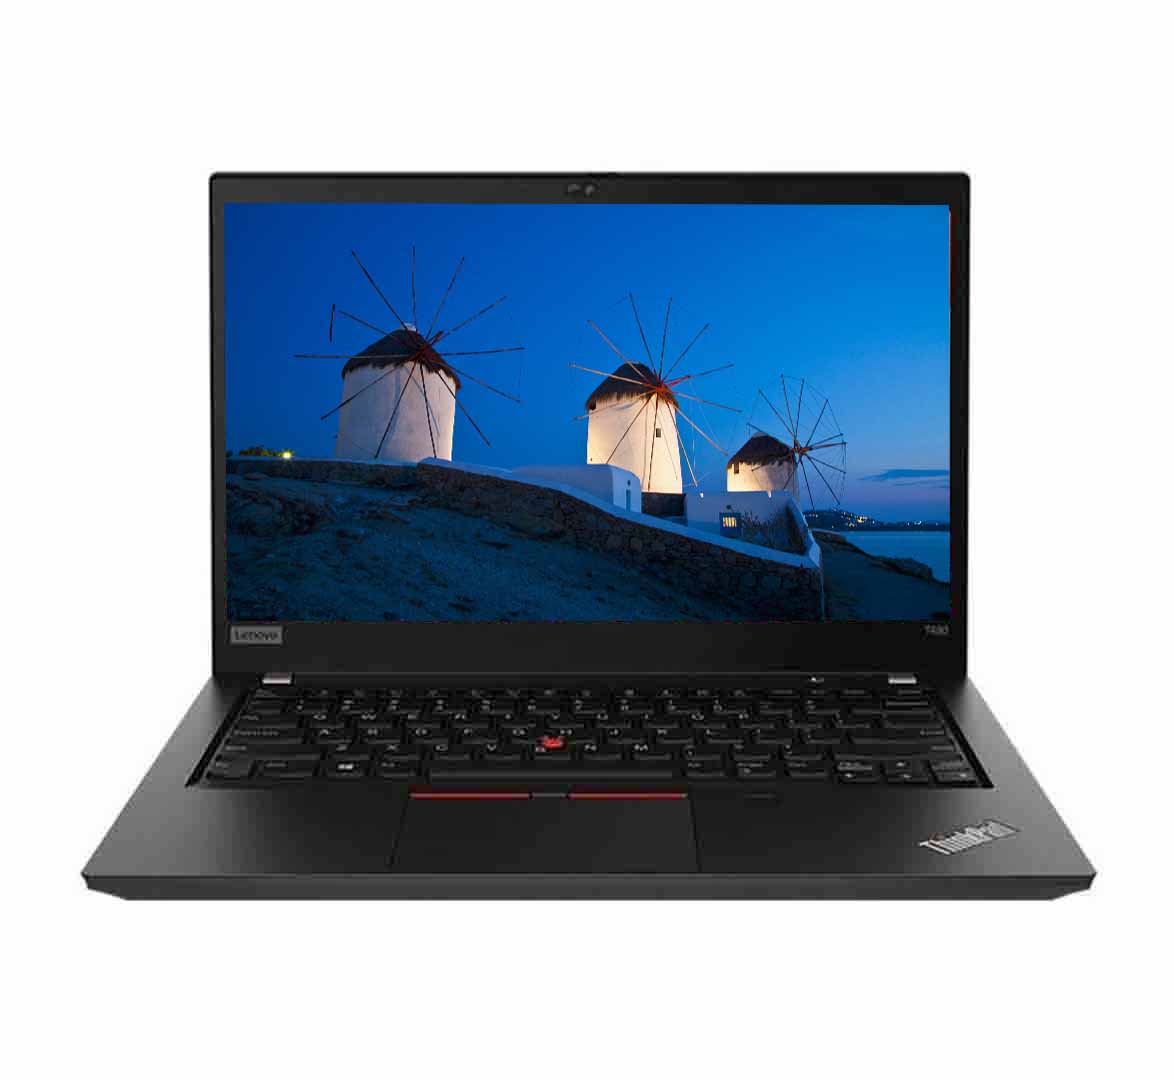 Lenovo ThinkPad T490s Business Laptop, Intel Core i7-8th Generation CPU, 16GB RAM, 512GB SSD, 14 inch Touchscreen, Windows 10 Pro, Refurbished Laptop